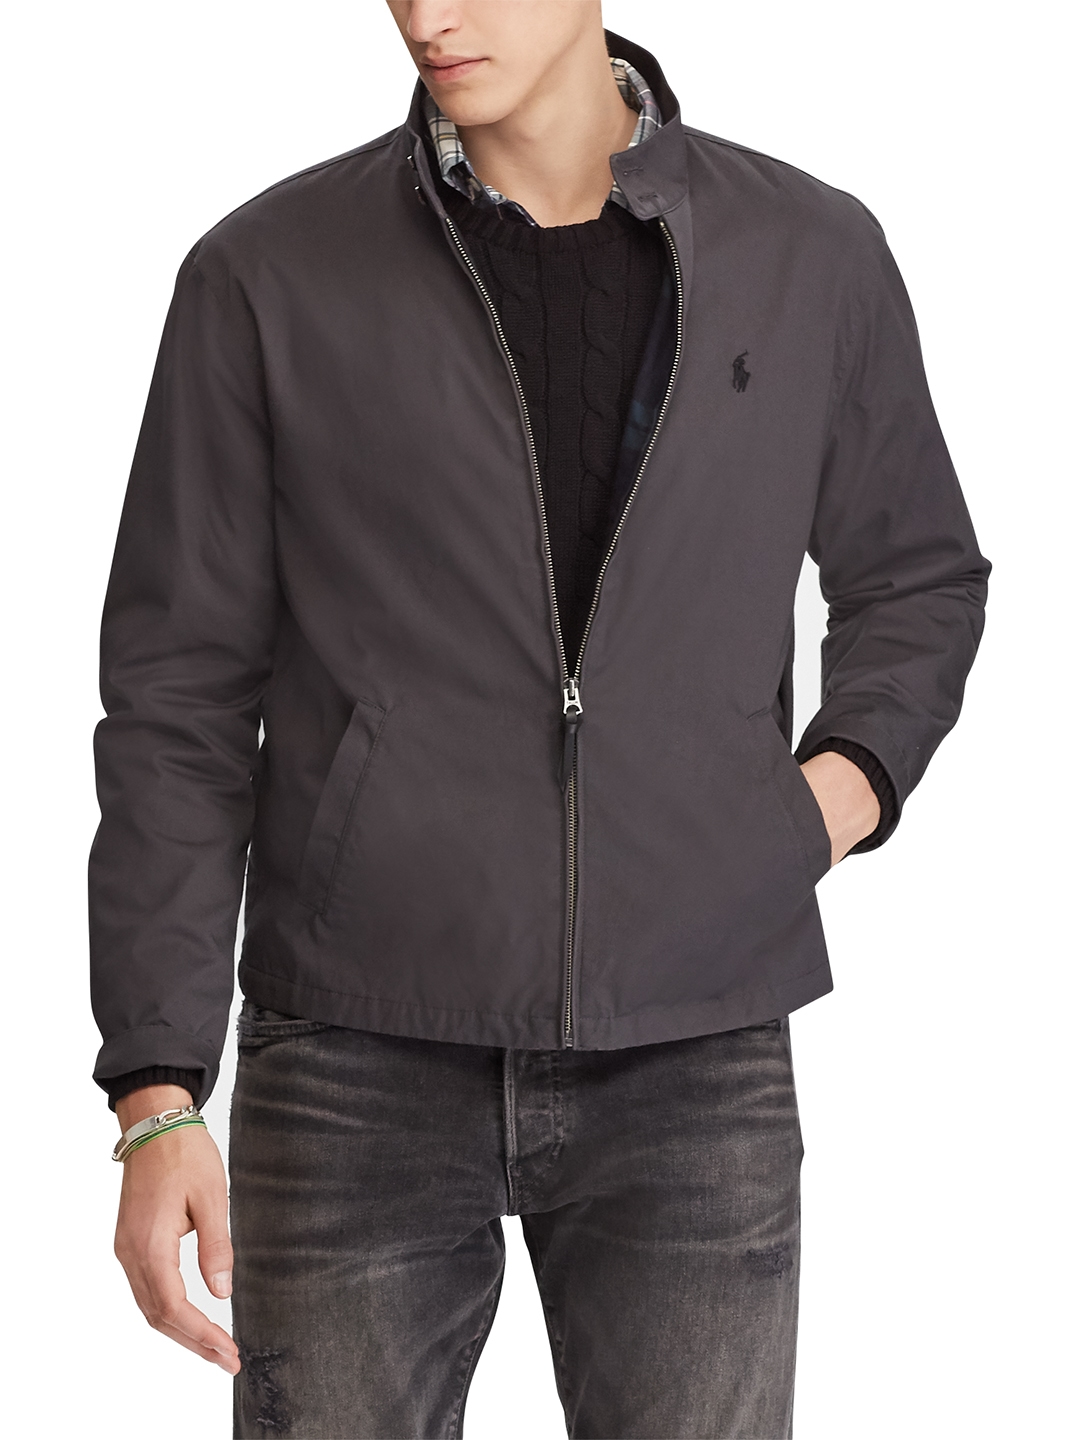 Buy Polo Ralph Lauren Cotton Twill Jacket - Jackets for Men 6942387 | Myntra